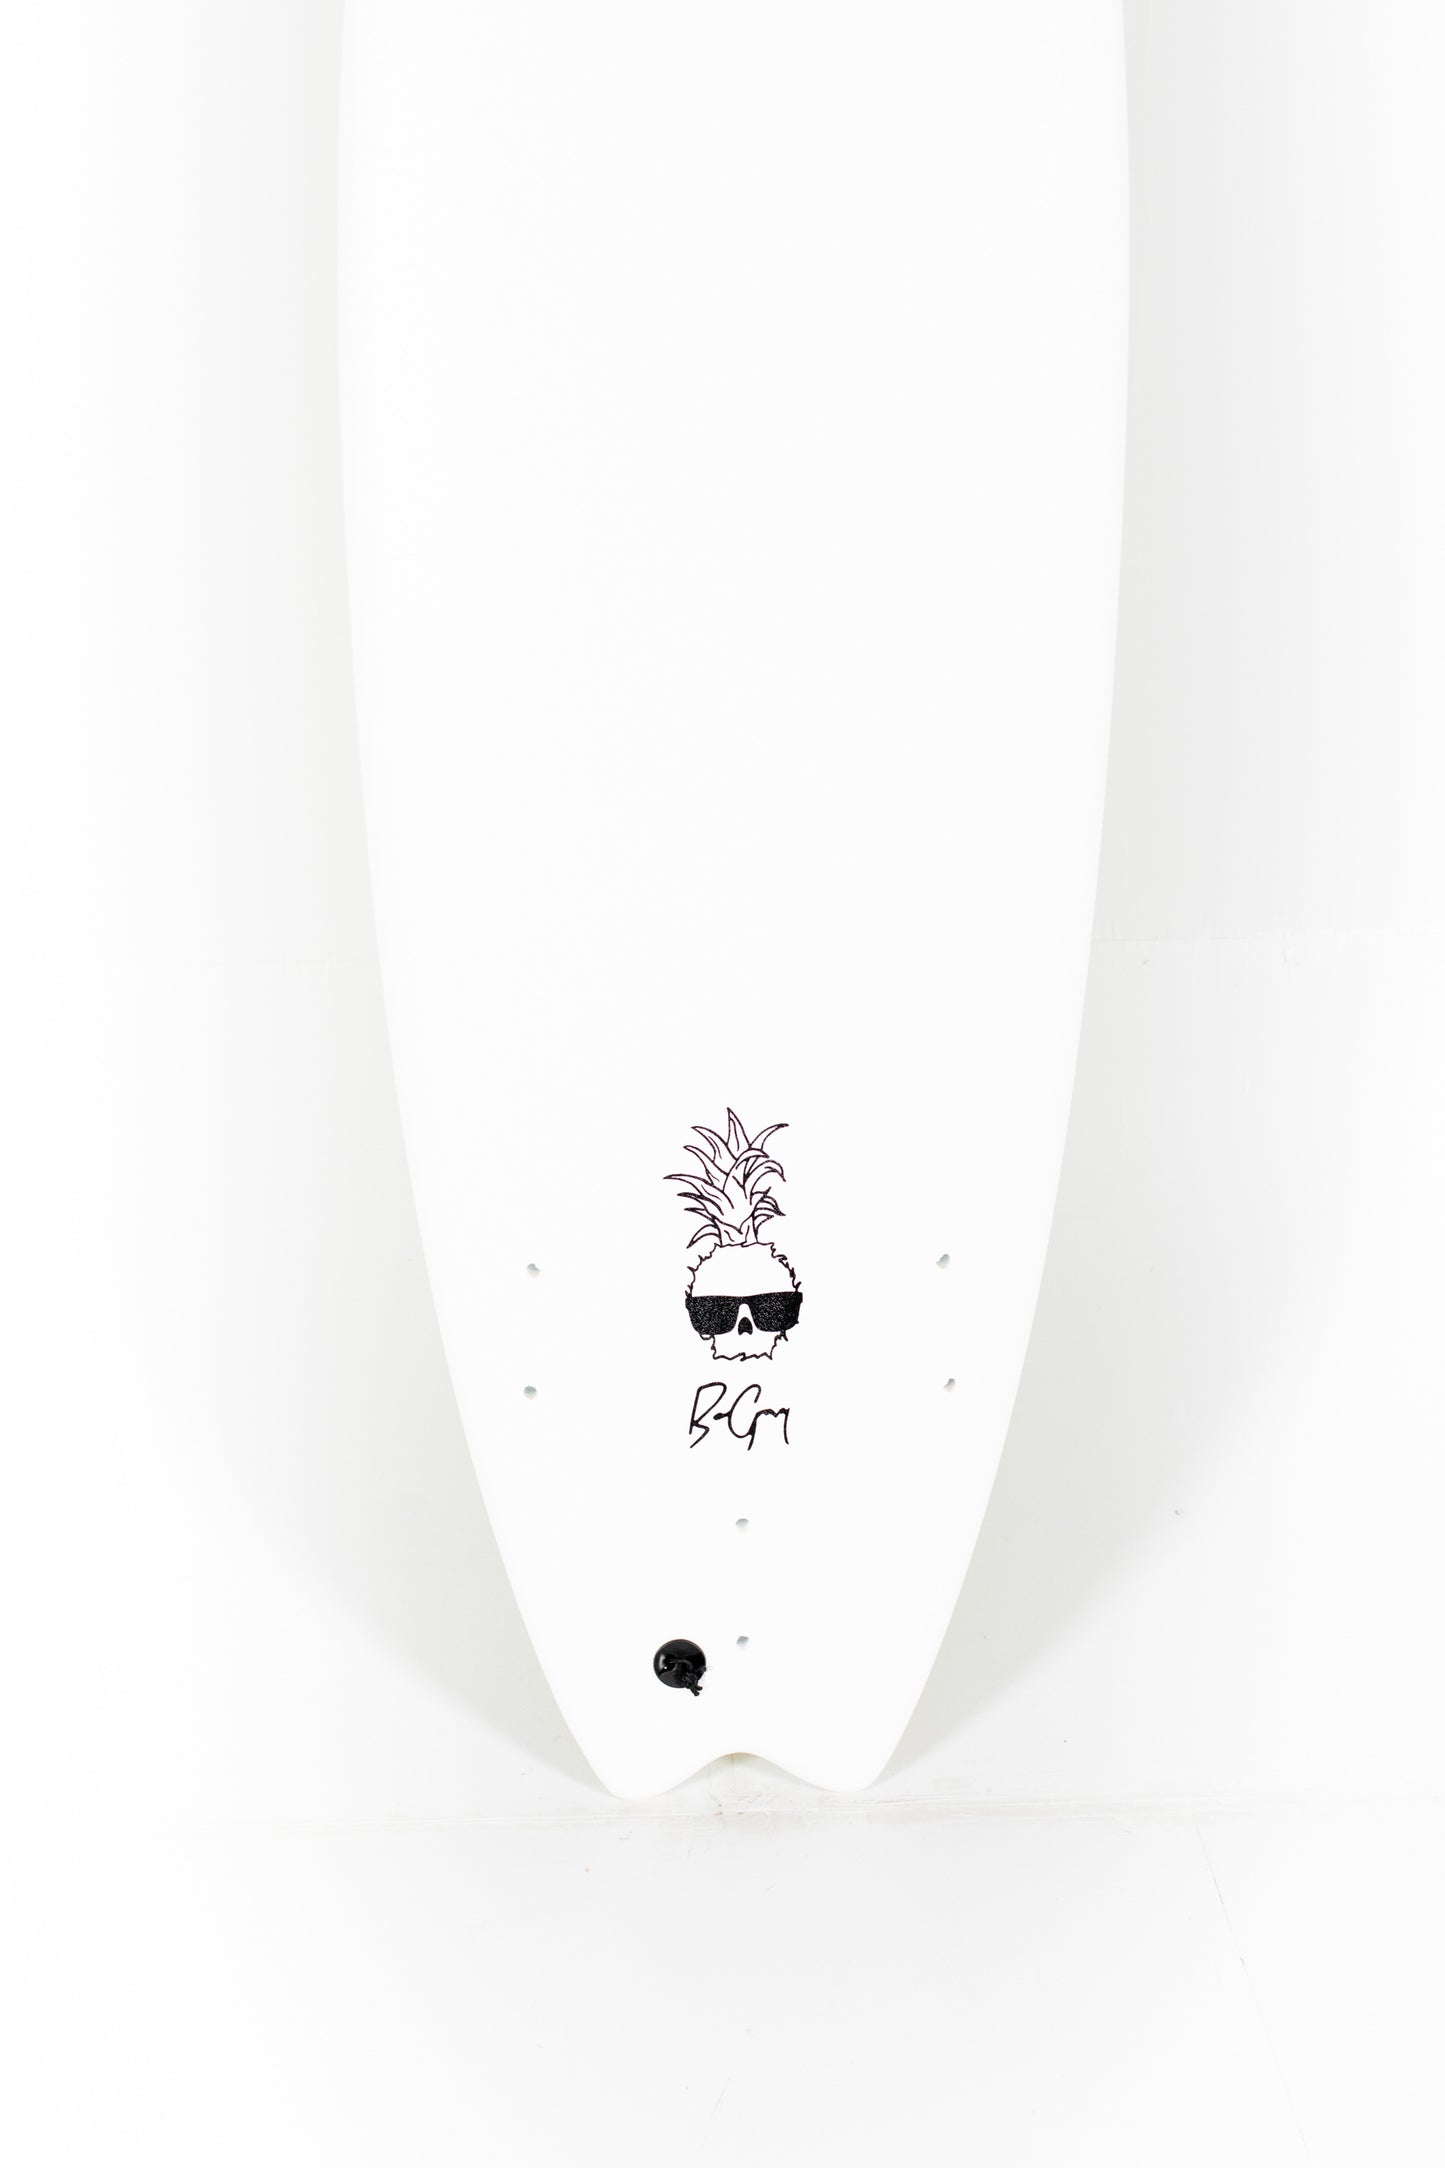 
                  
                    Pukas Surf Shop - Catch Surf - WAVE BANDIT - PERFORMER x BEN GRAVY - 6´6" x 22" x 3,125" x 55L.
                  
                